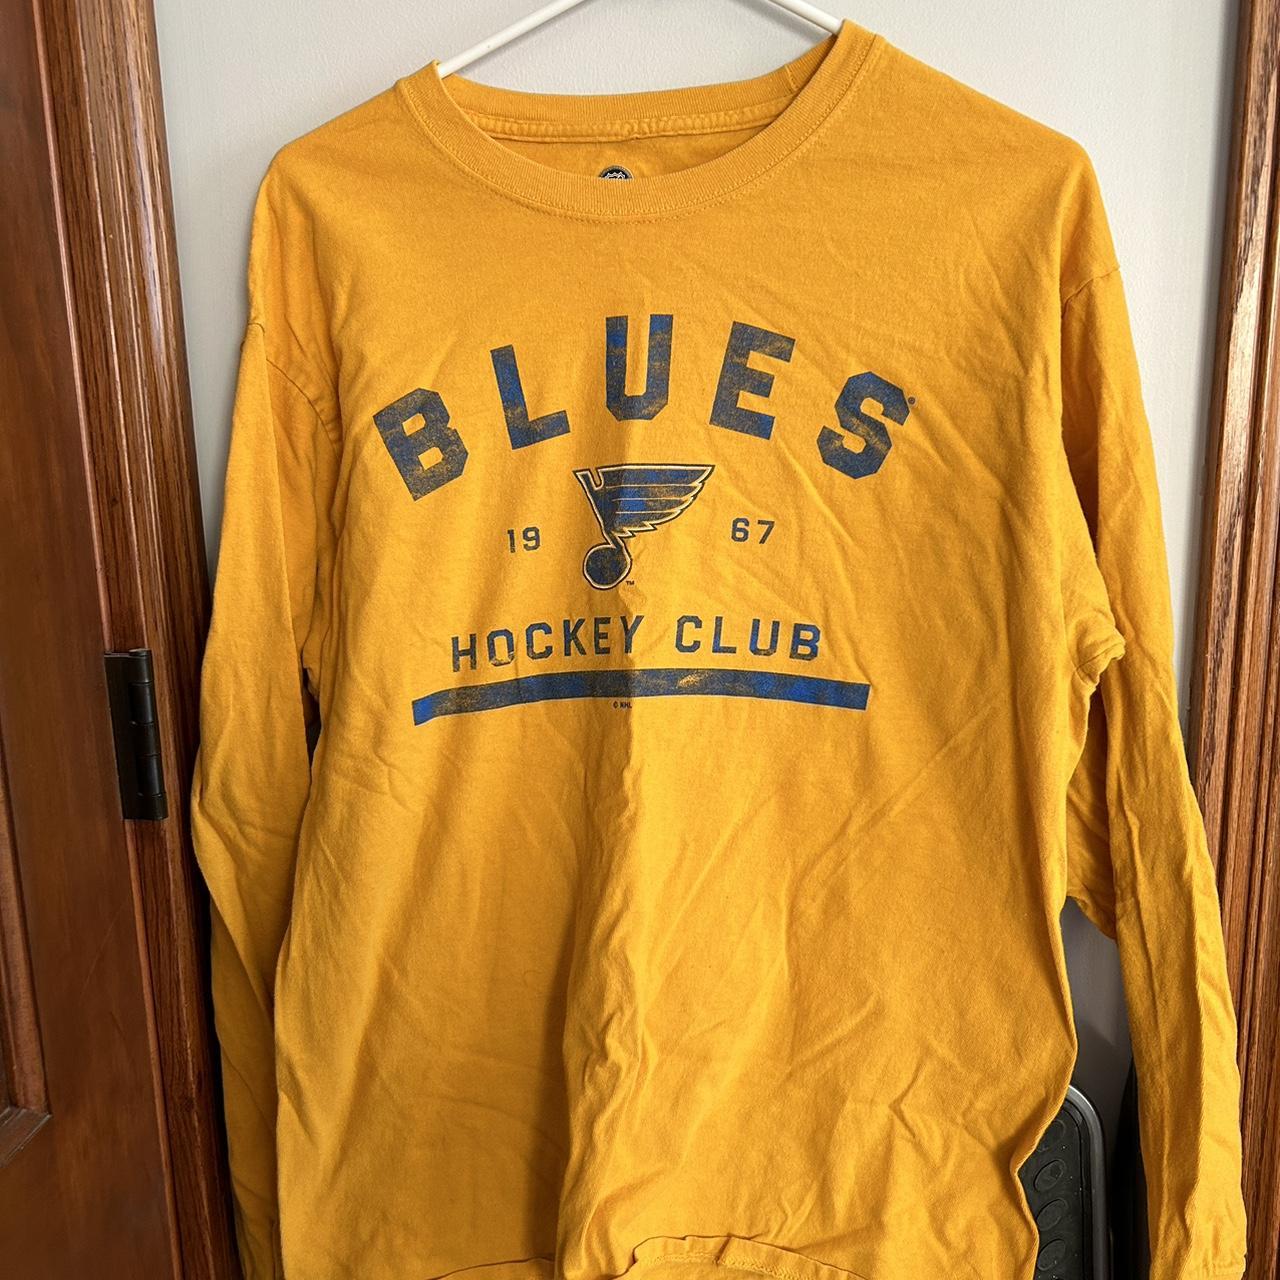 St. Louis Blues Hockey T-Shirt